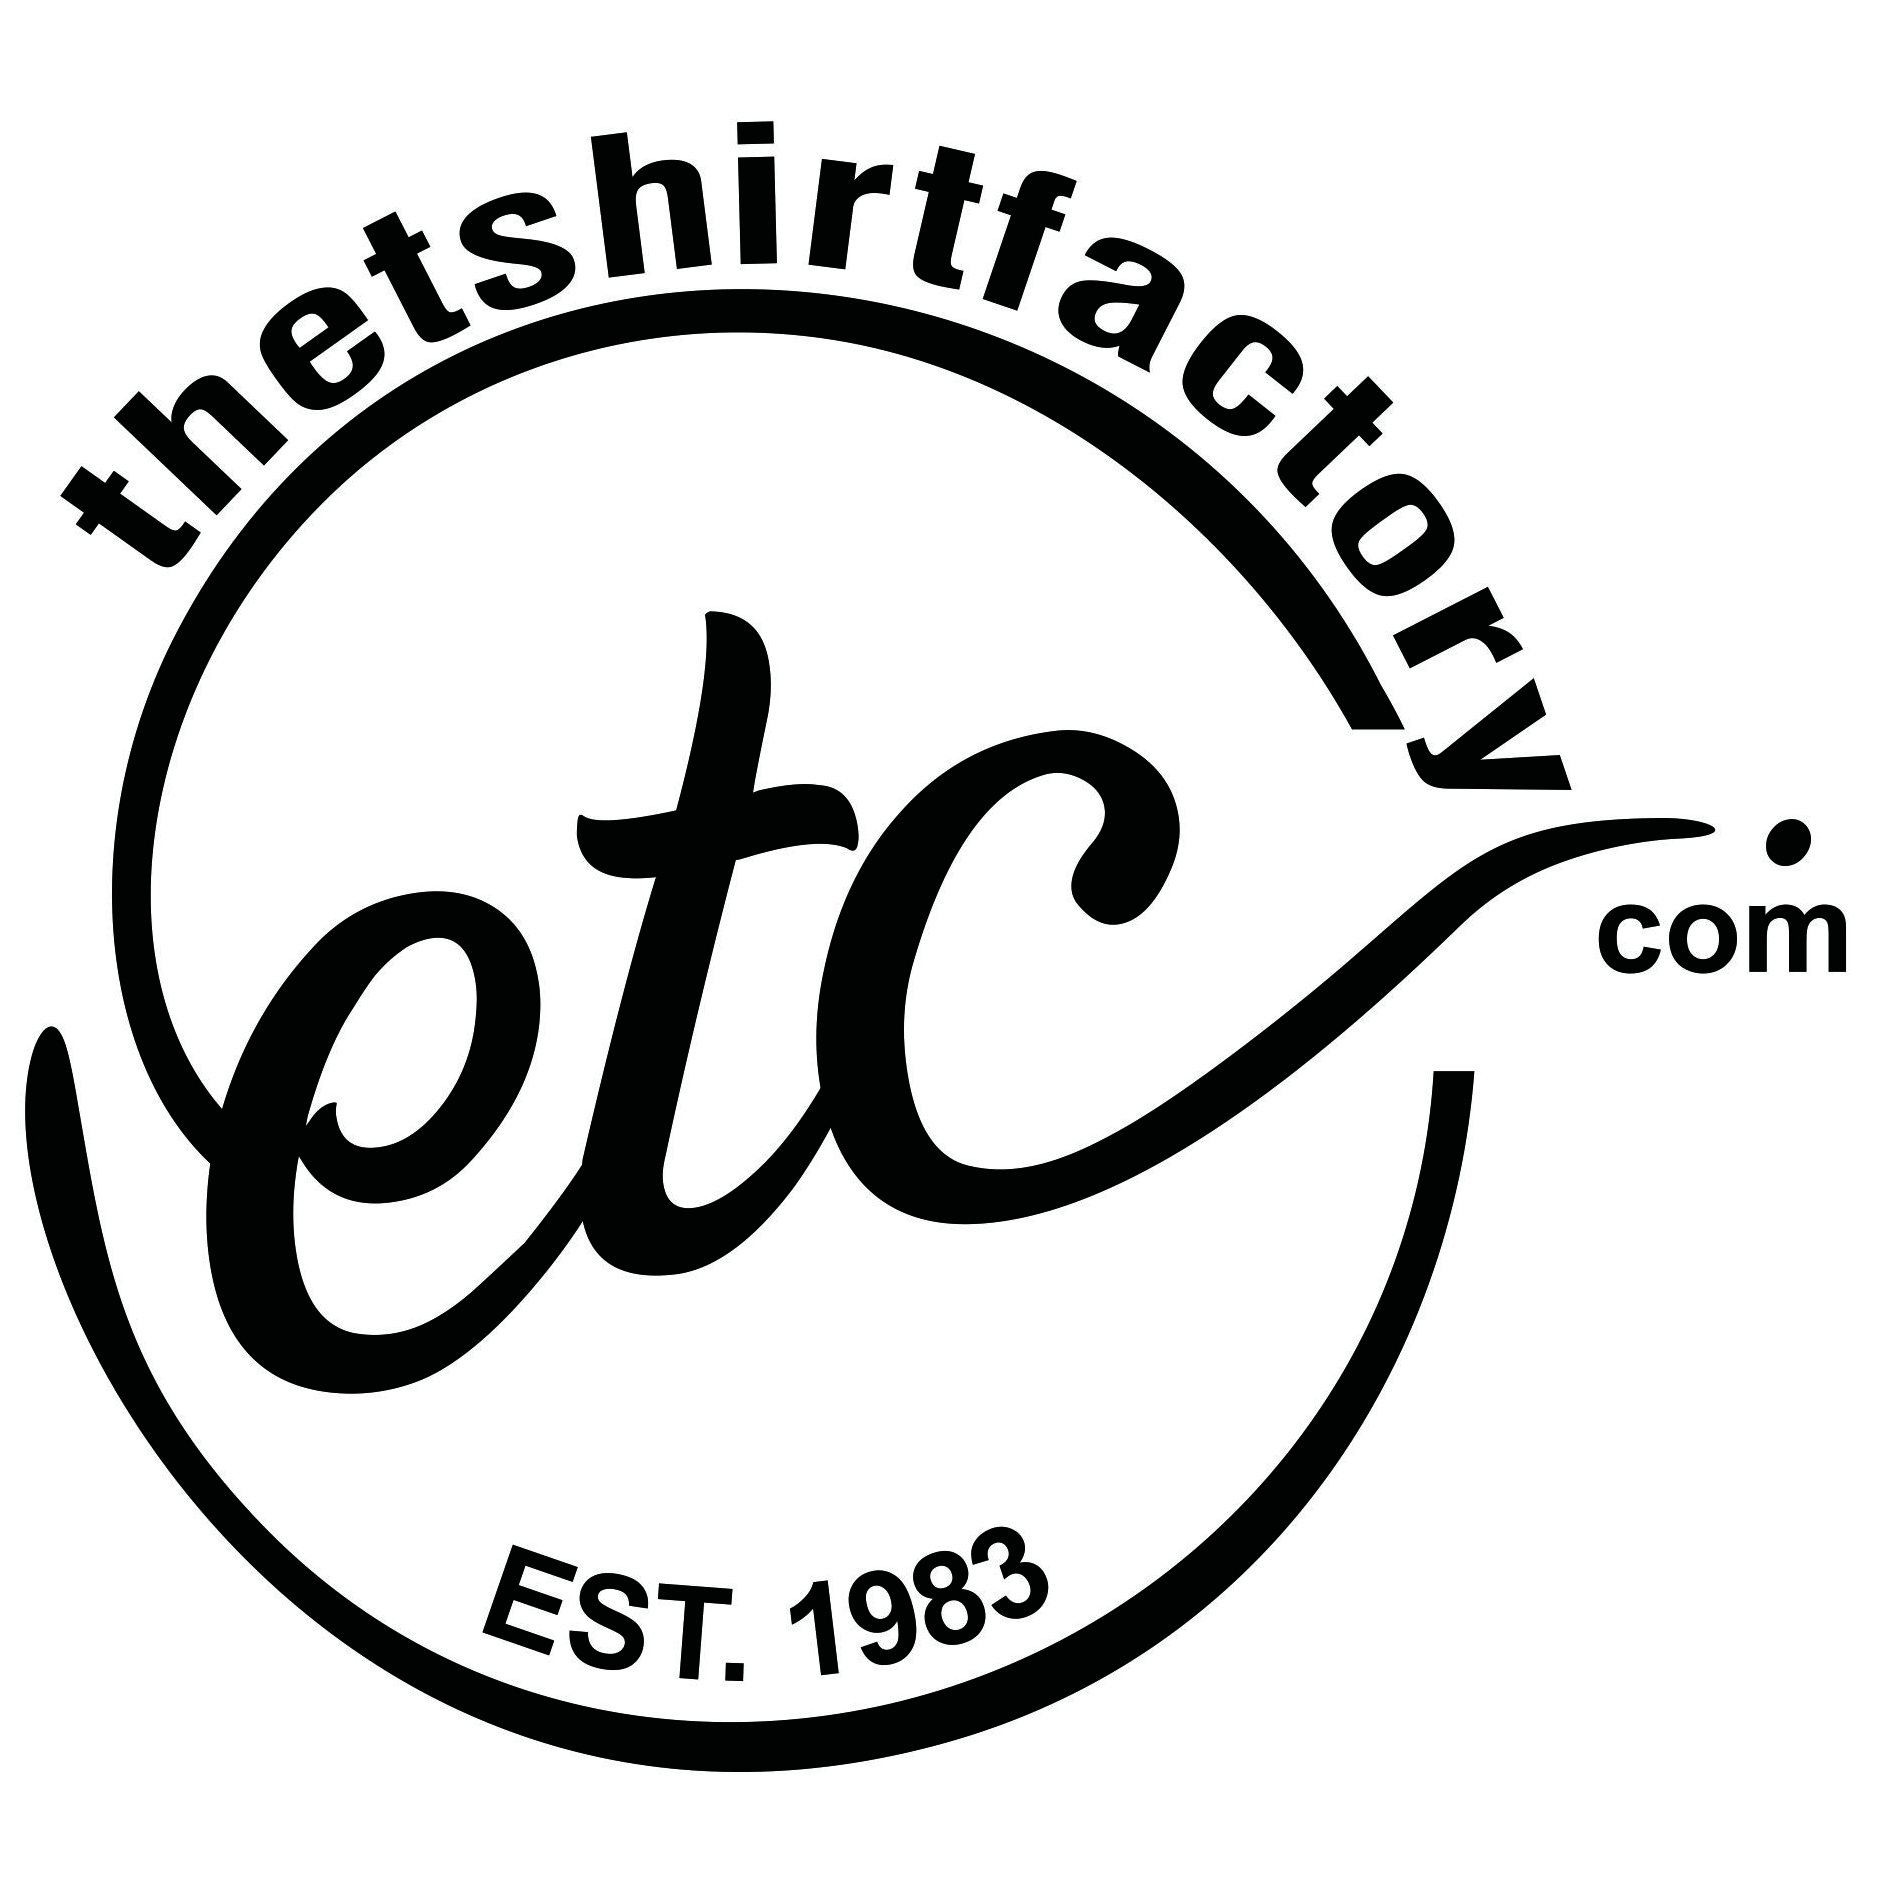 The T-Shirt Factory, etc.